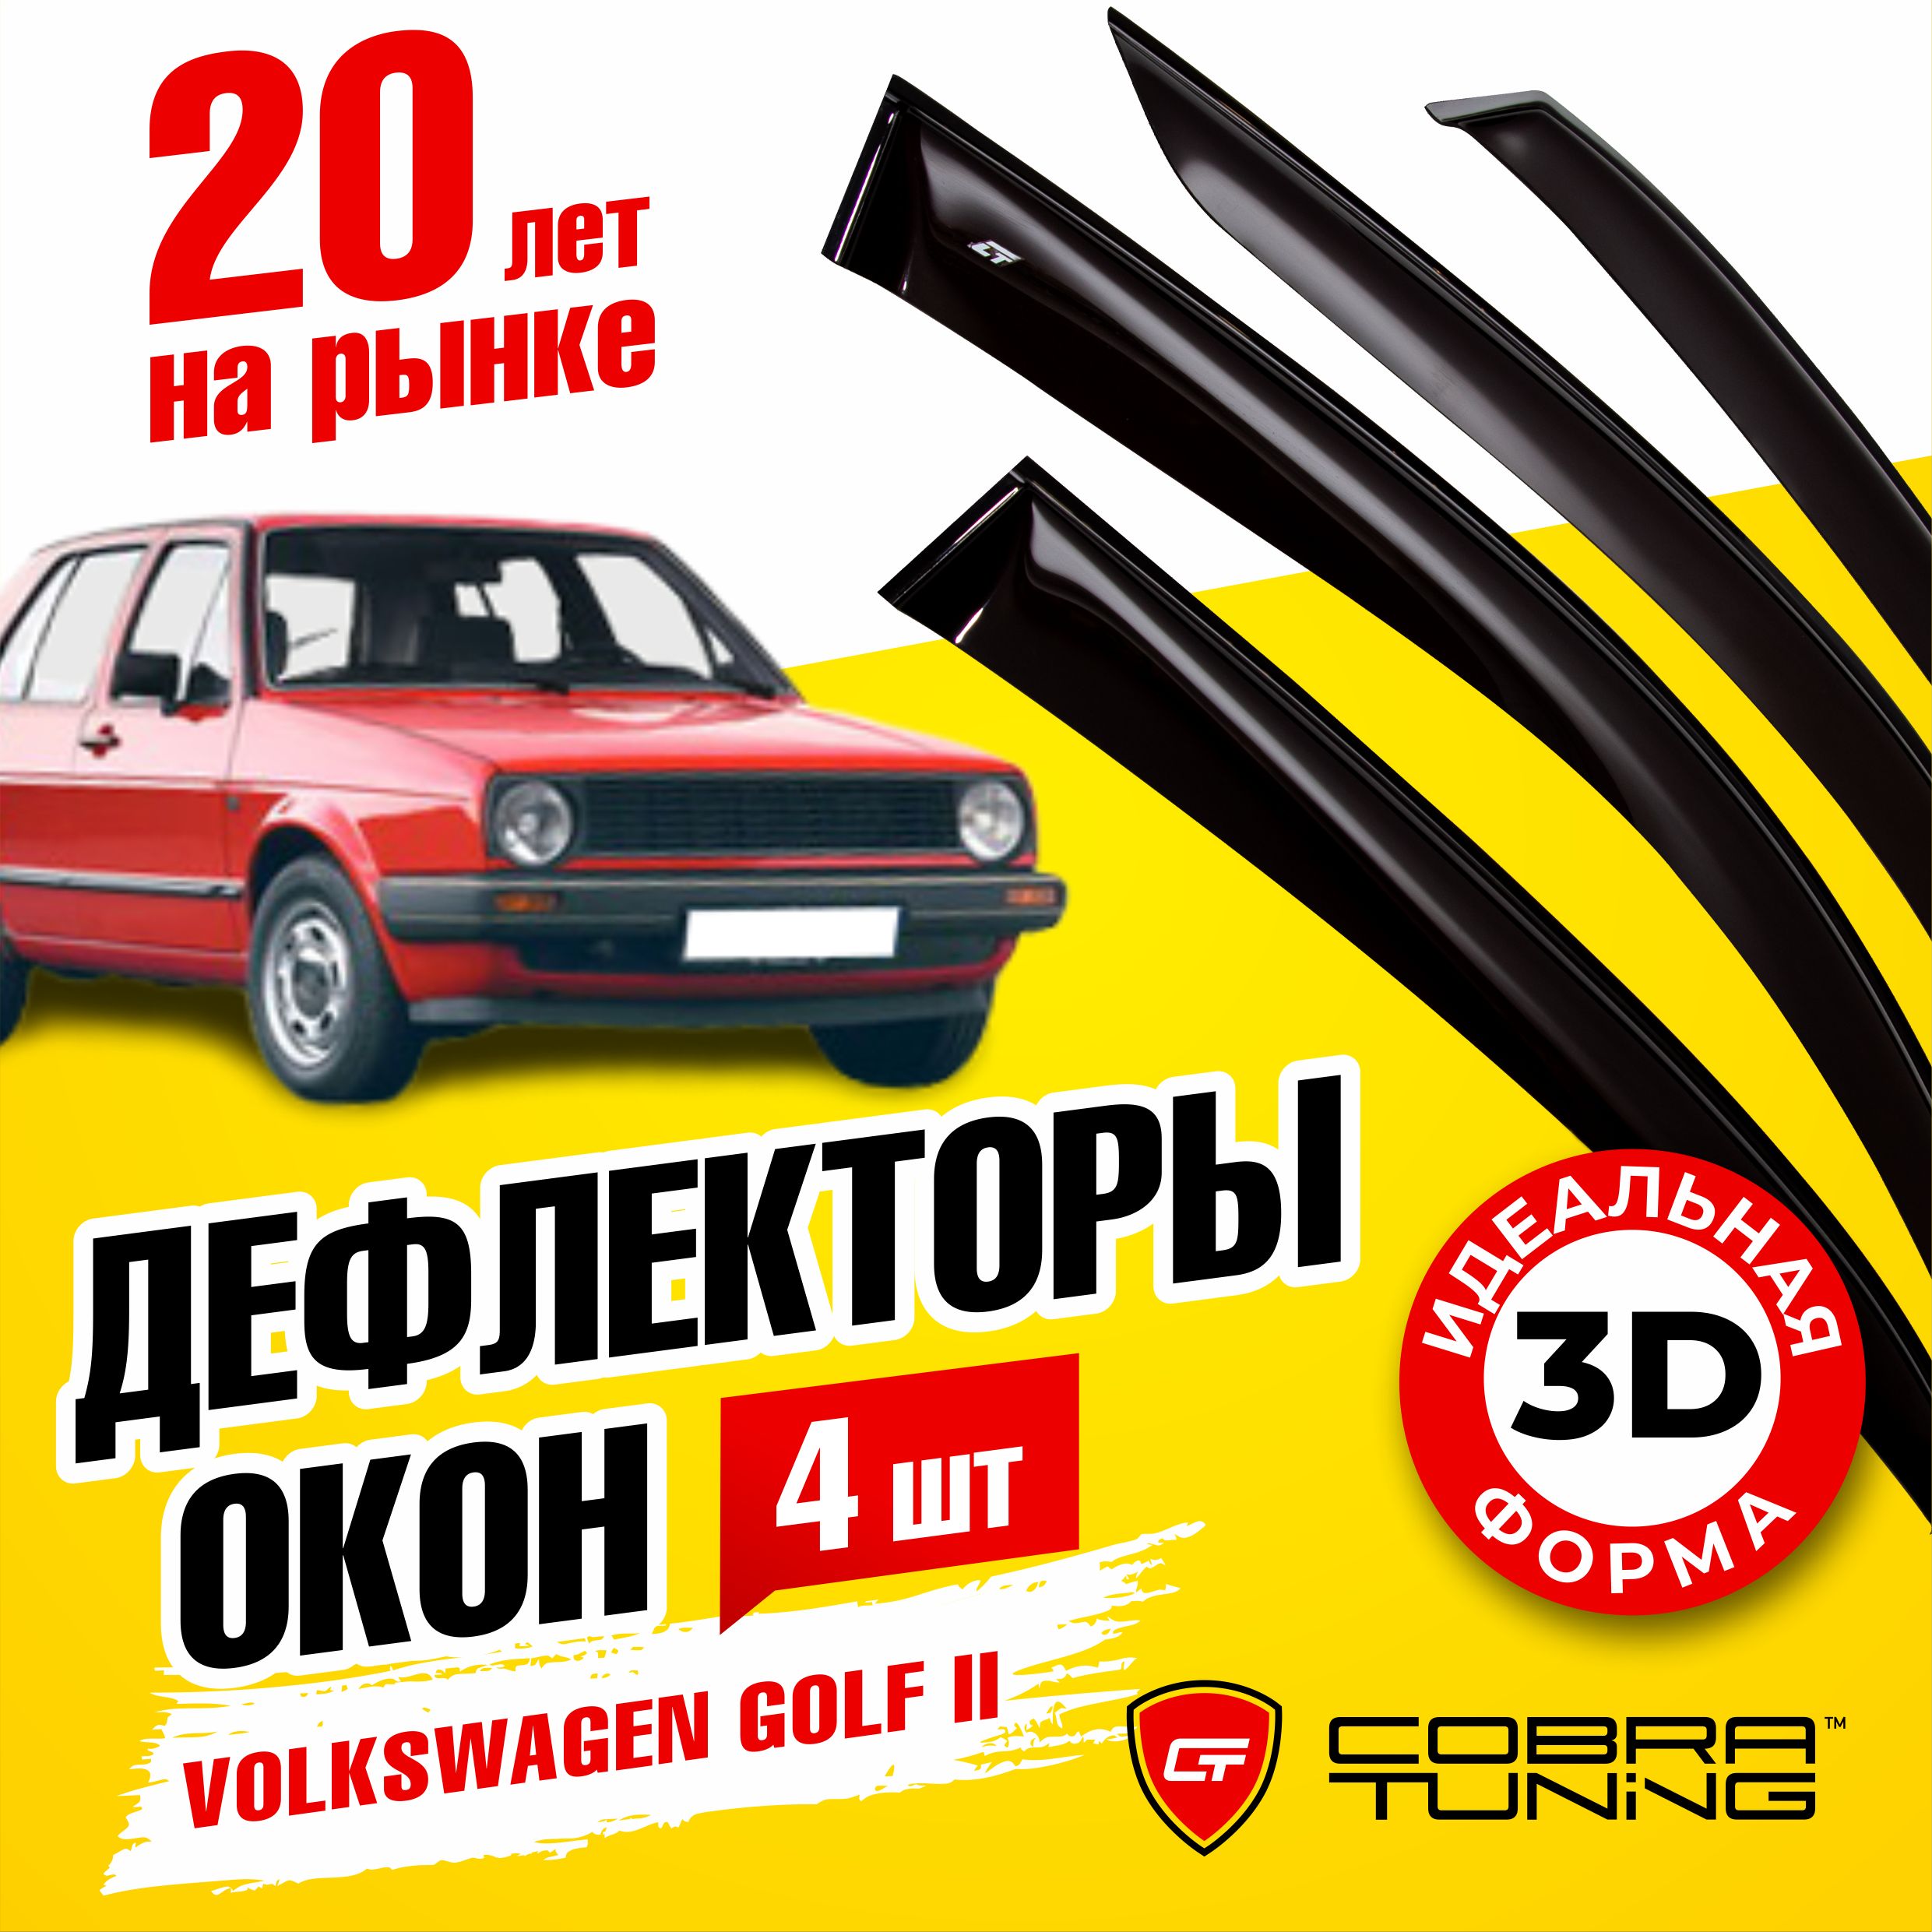 Обвес и тюнинг для Volkswagen Golf 2 1983-1991